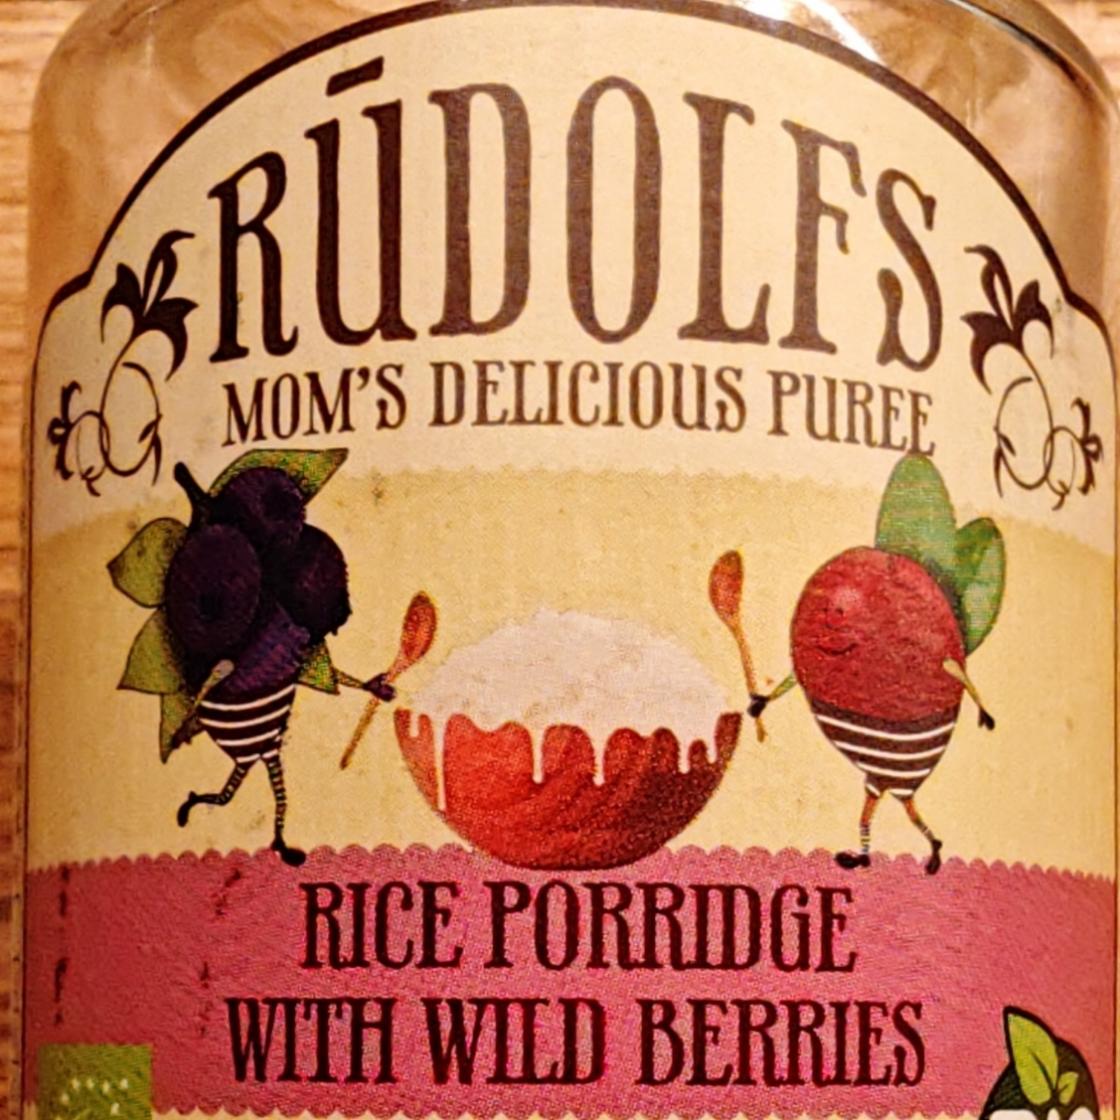 Fotografie - Bio rice porridge with wild berries Rudolfs